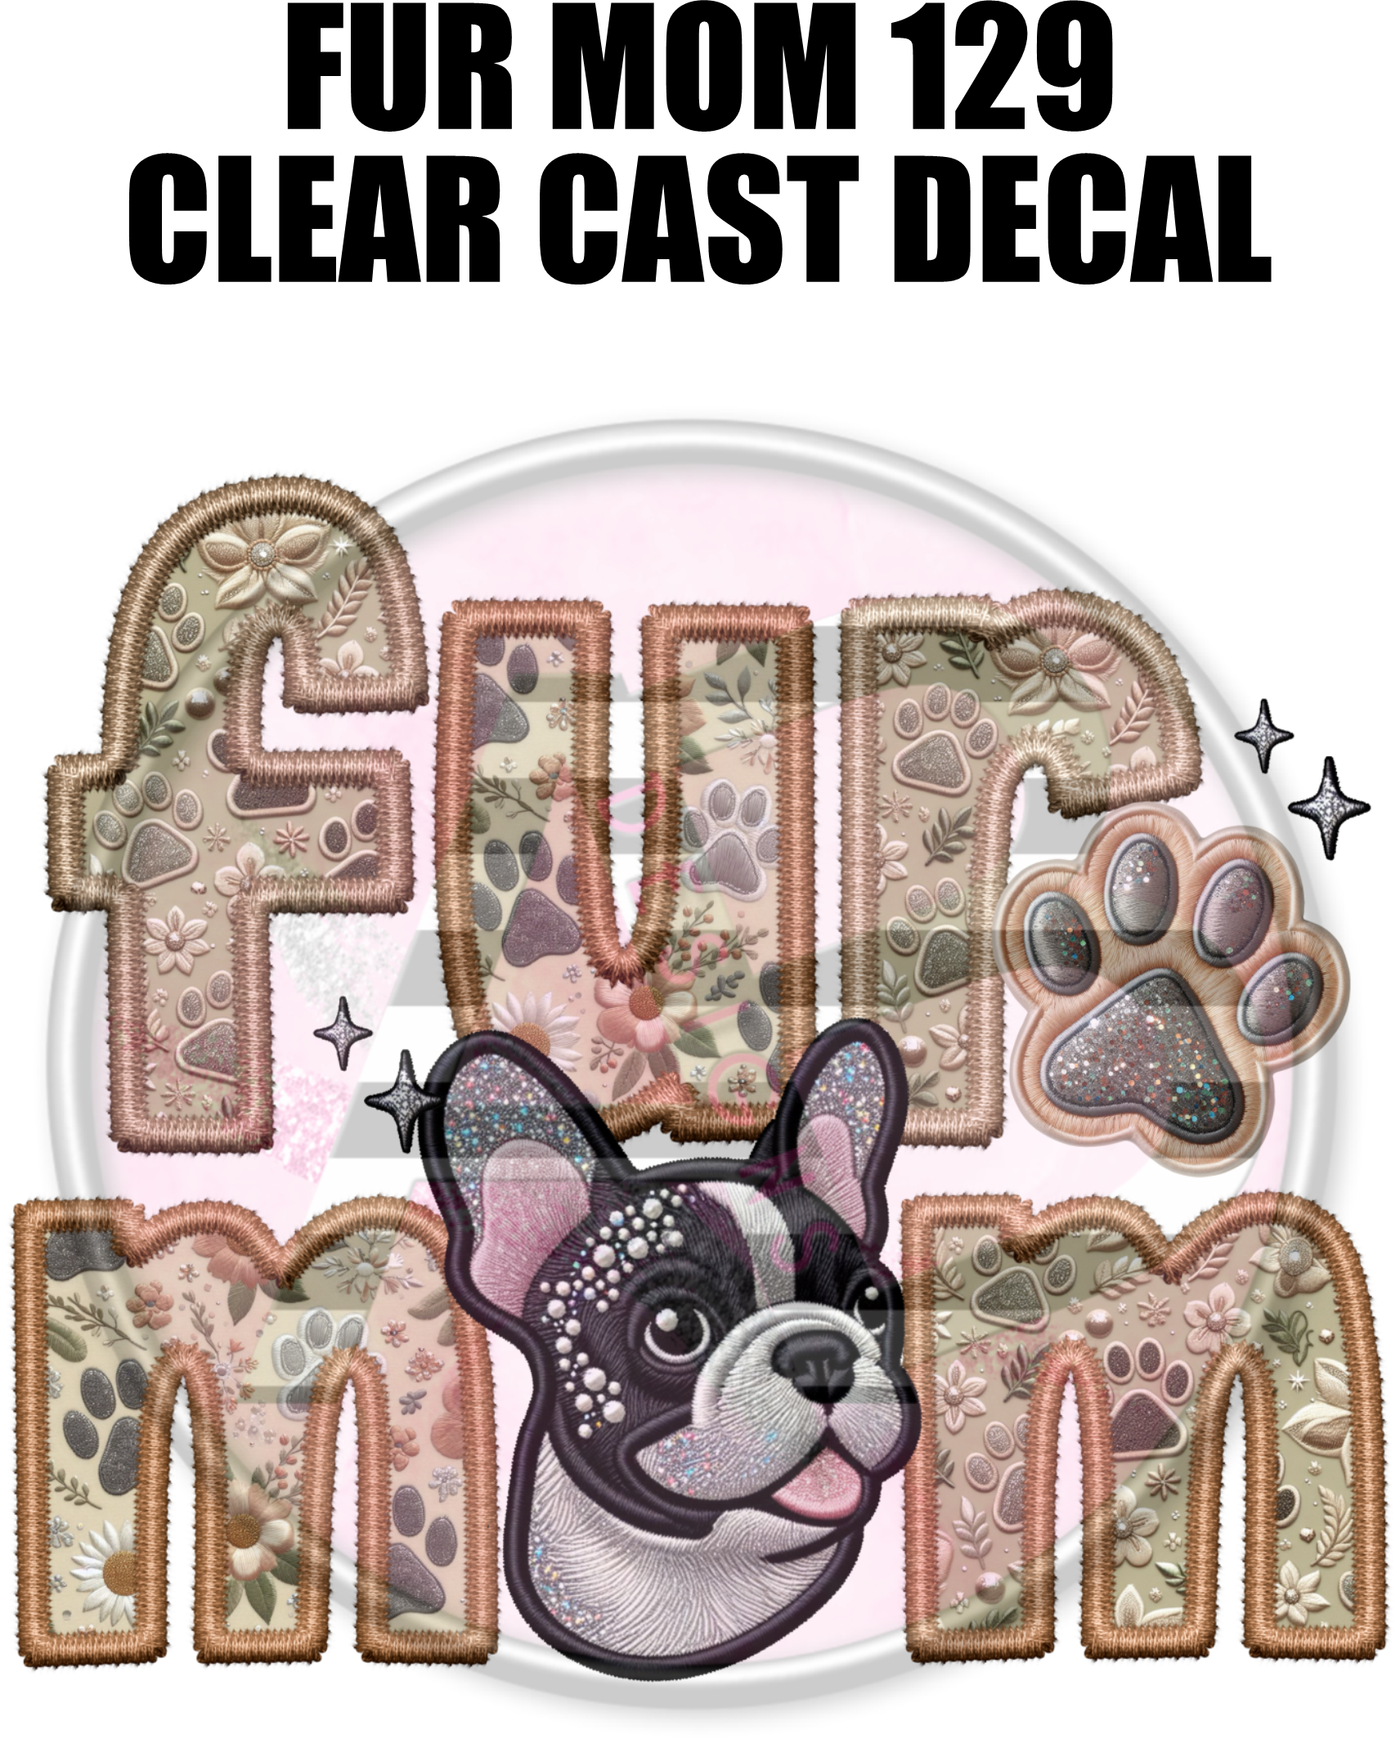 Fur Mom 129 - Clear Cast Decal